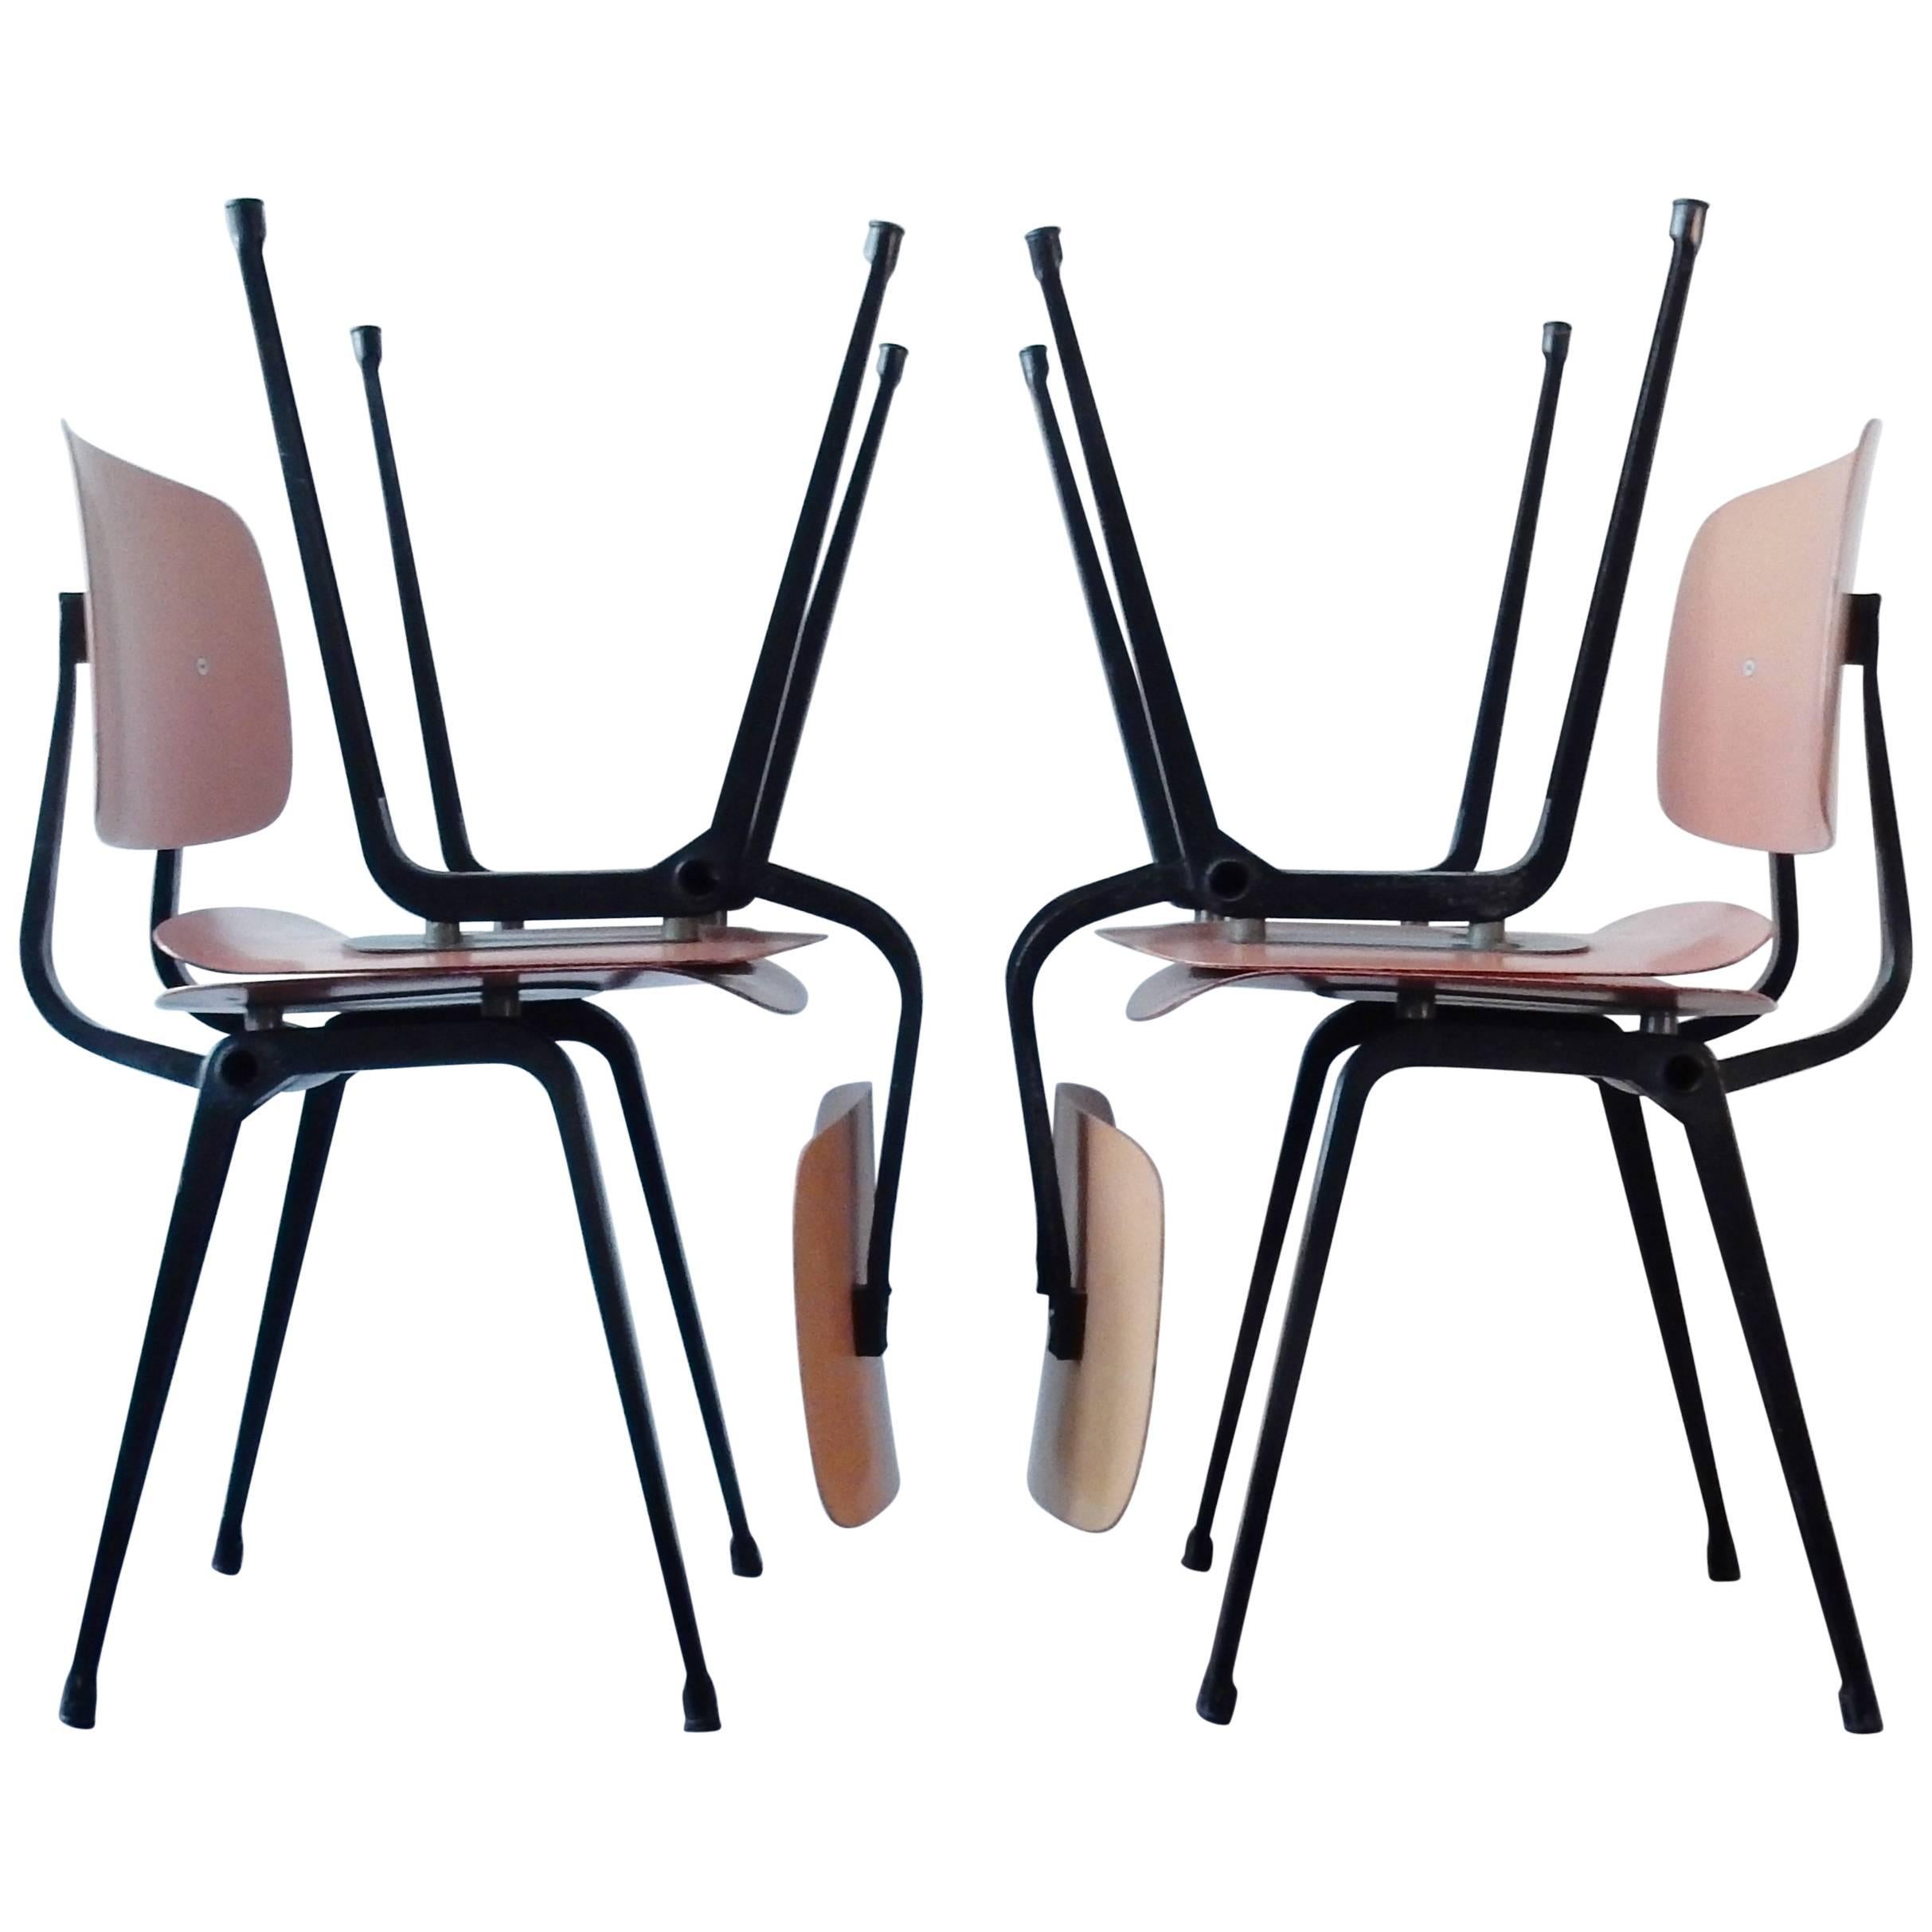 Set of Four Industrial Chairs, Model Revolt by Friso Kramer for Ahrend de Cirkel